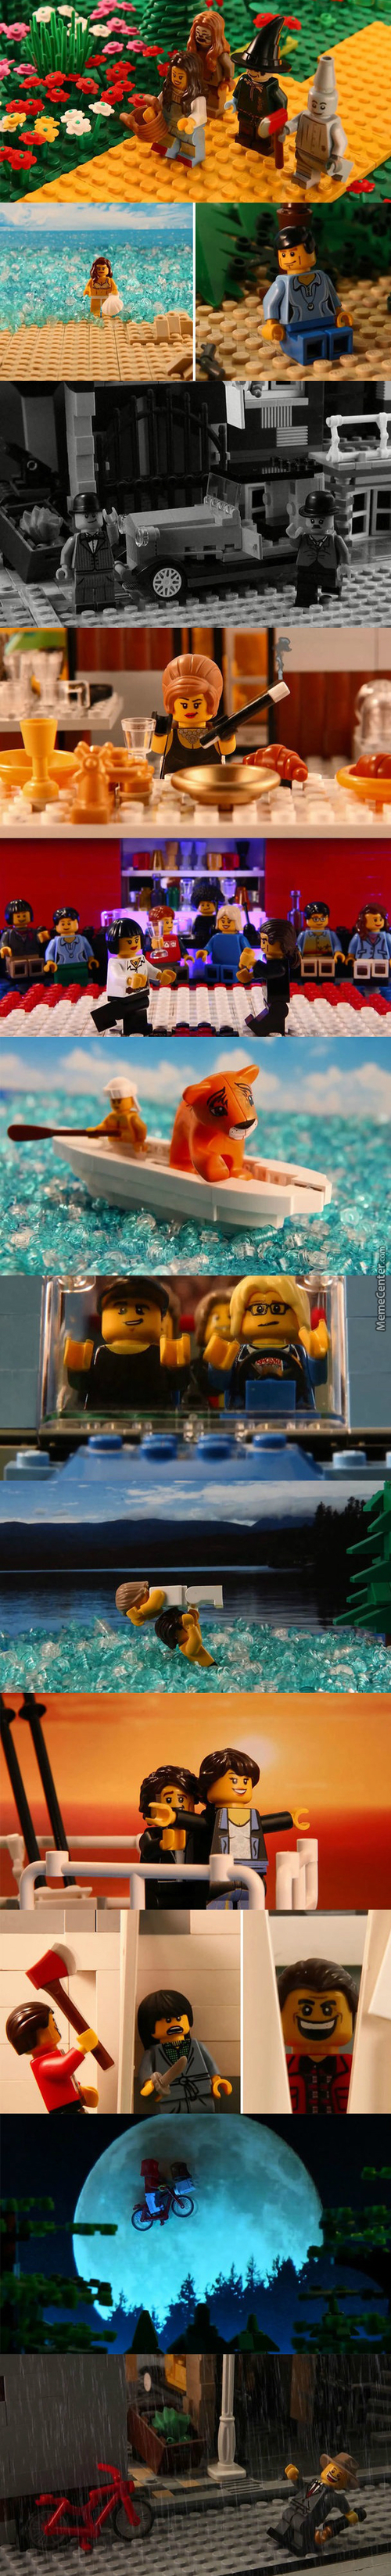 lego movie scenes